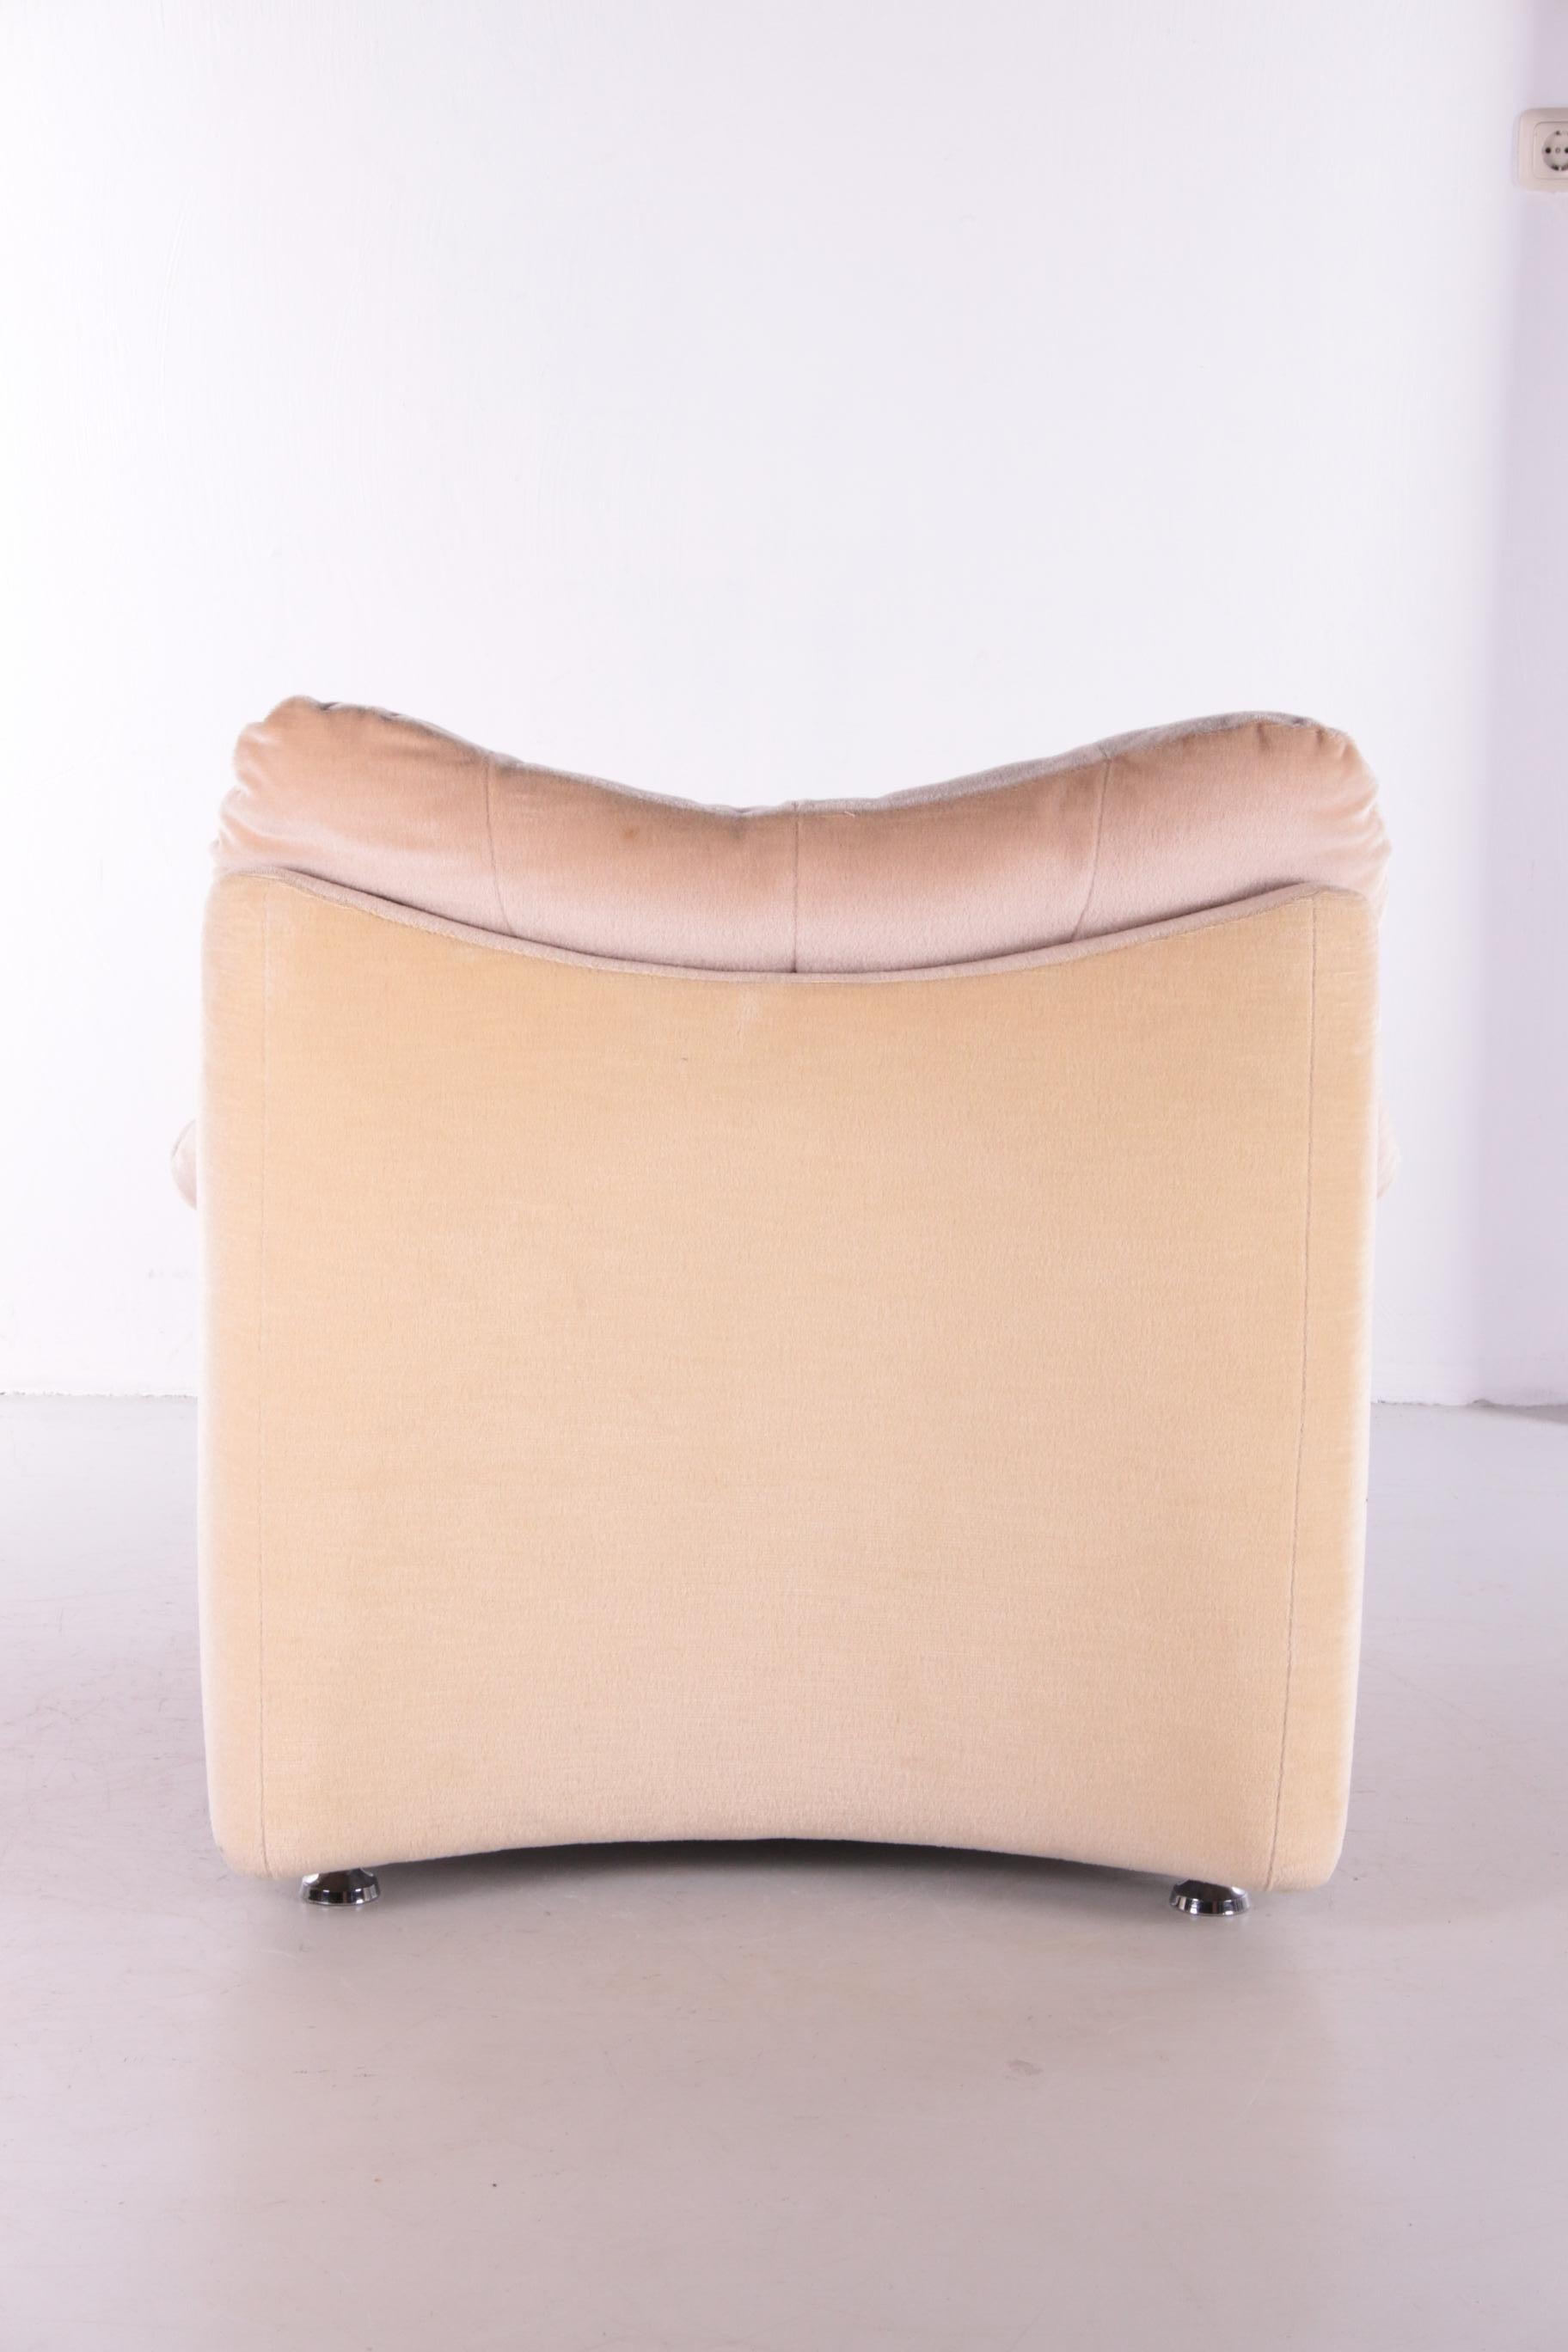 Vintage Design Lounge Chair Velvet from the 70s 6